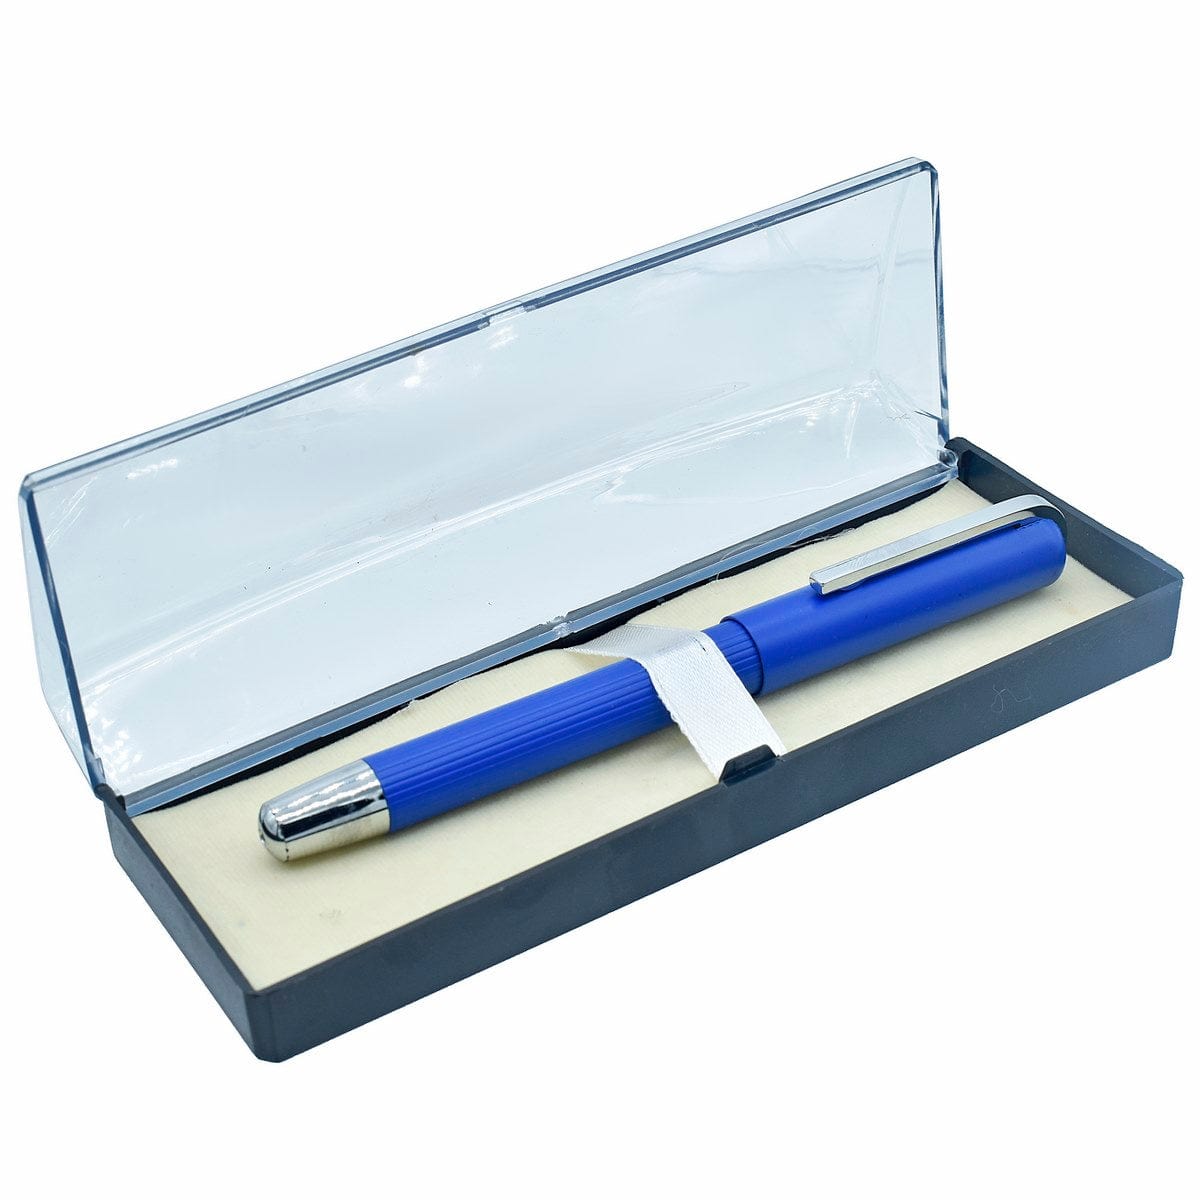 jags-mumbai Pen Blue Silver Clip Roller Pen in Blister Packaging